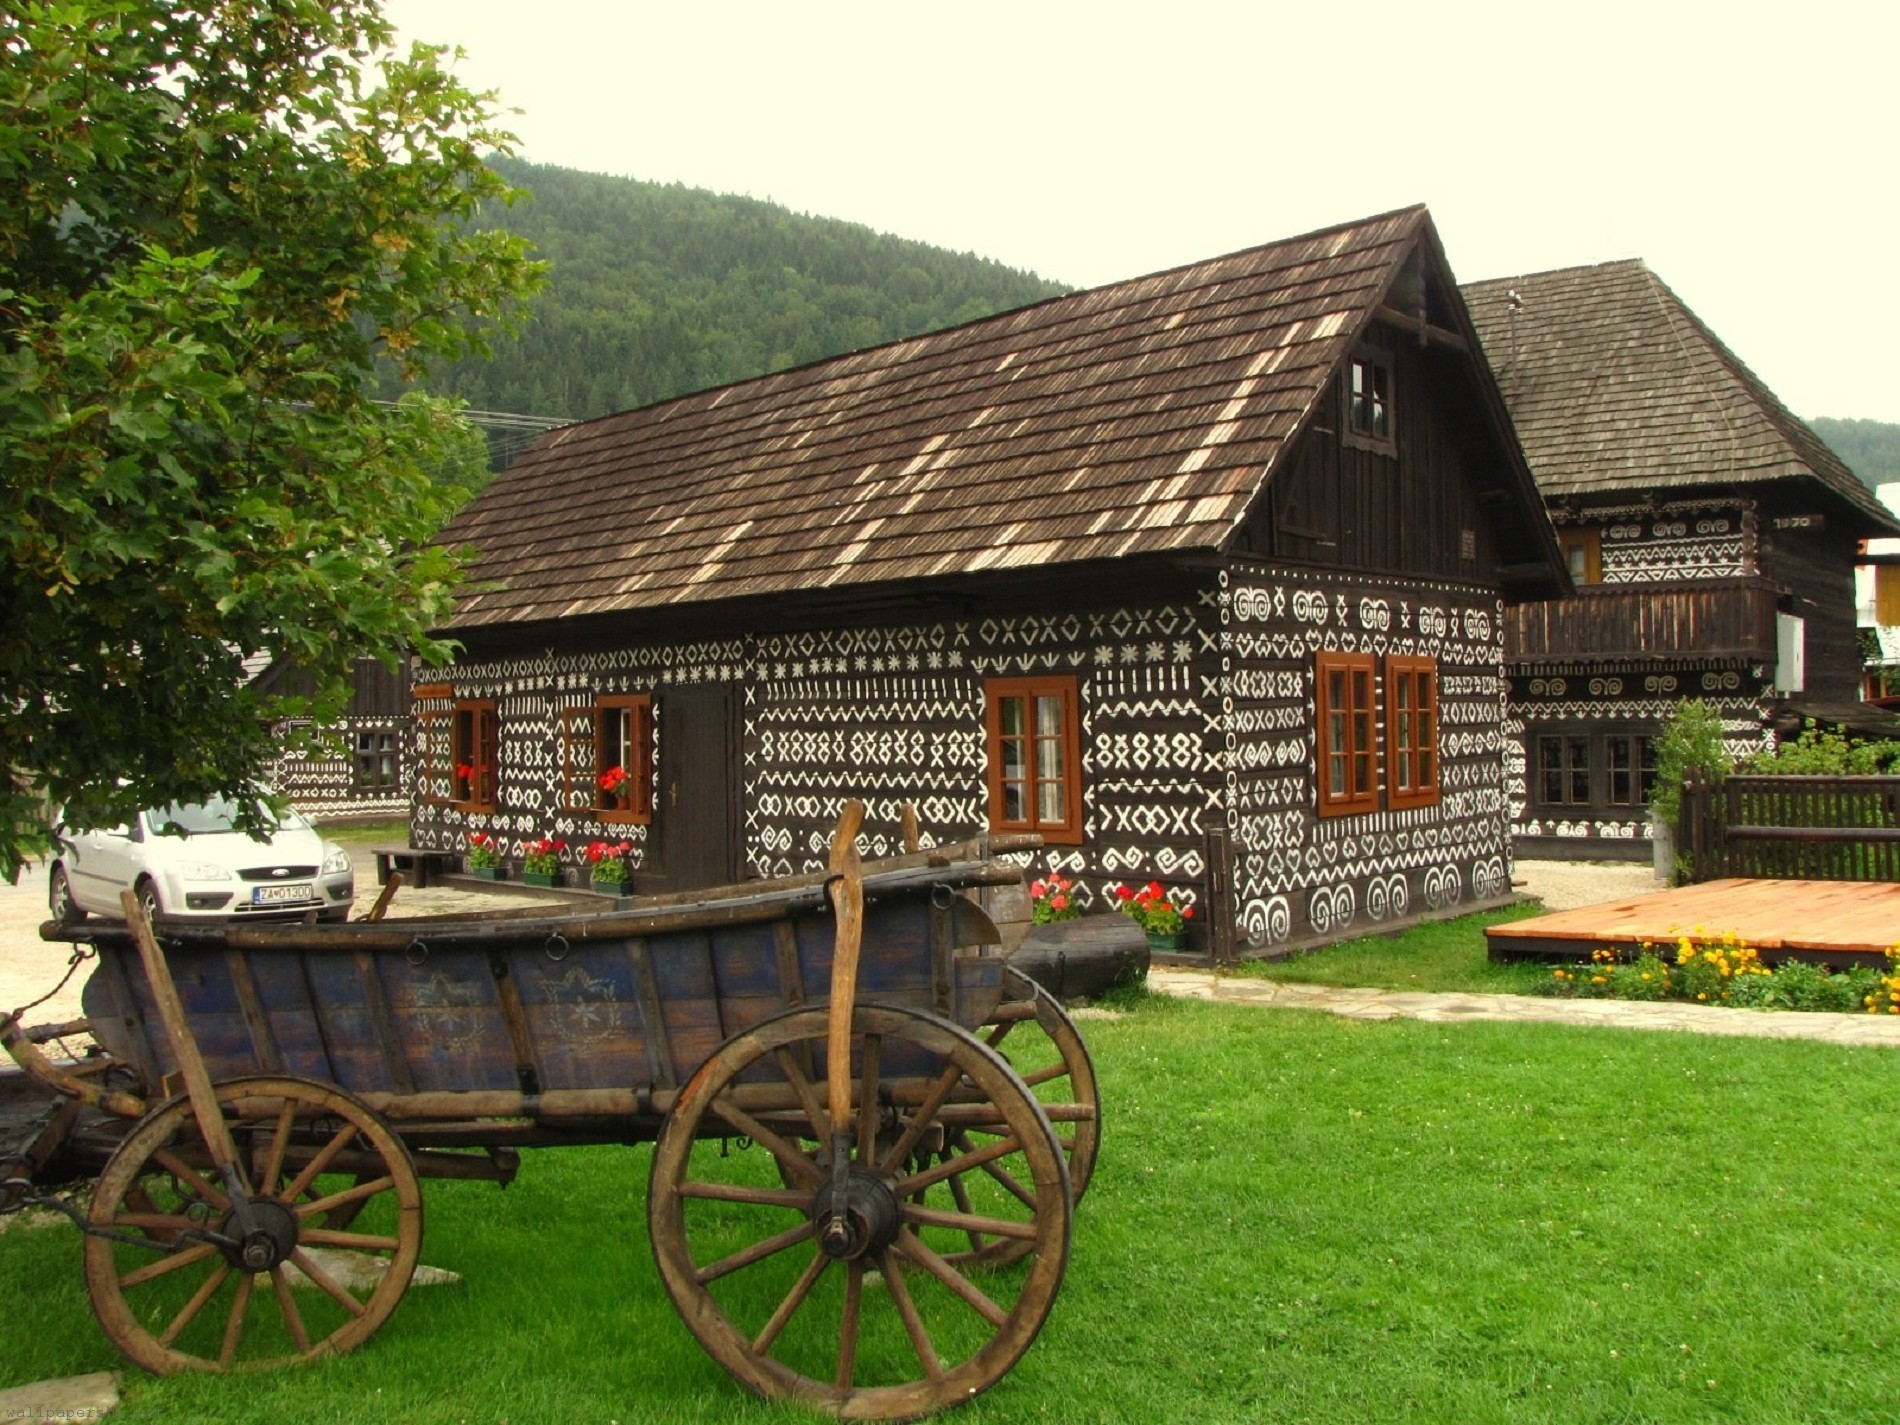 Houses in Slovakia